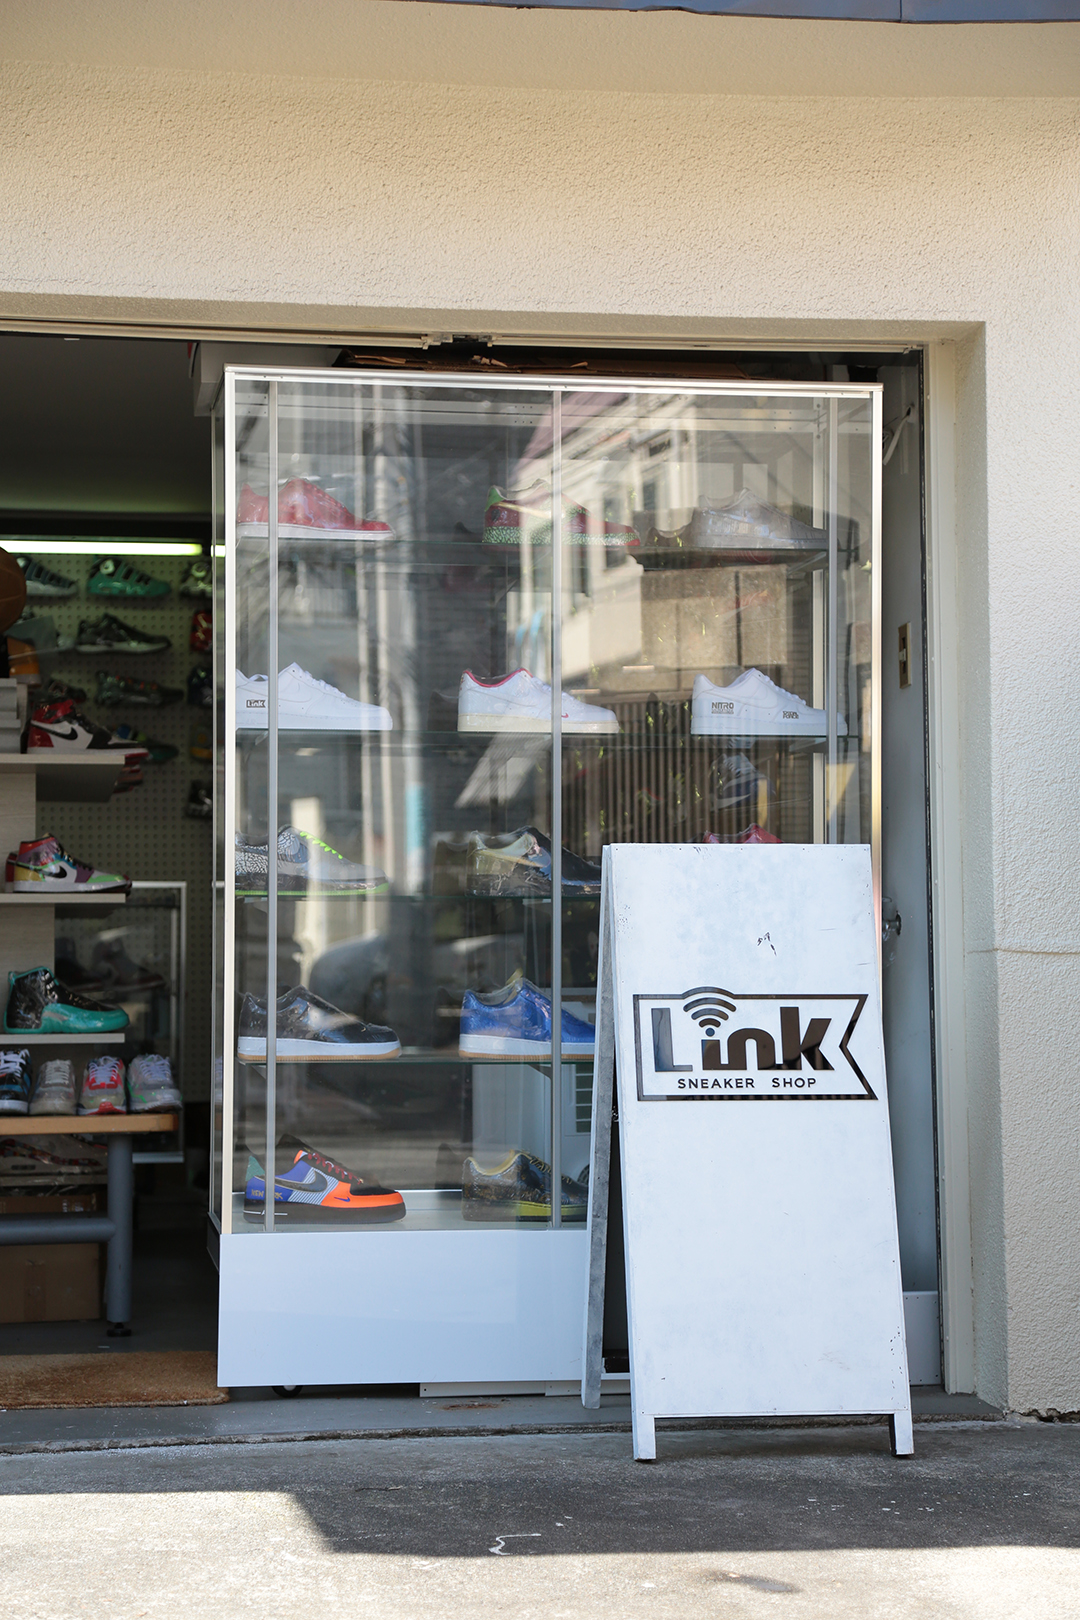 sneakershop LINK │ スニーカーショップリンク